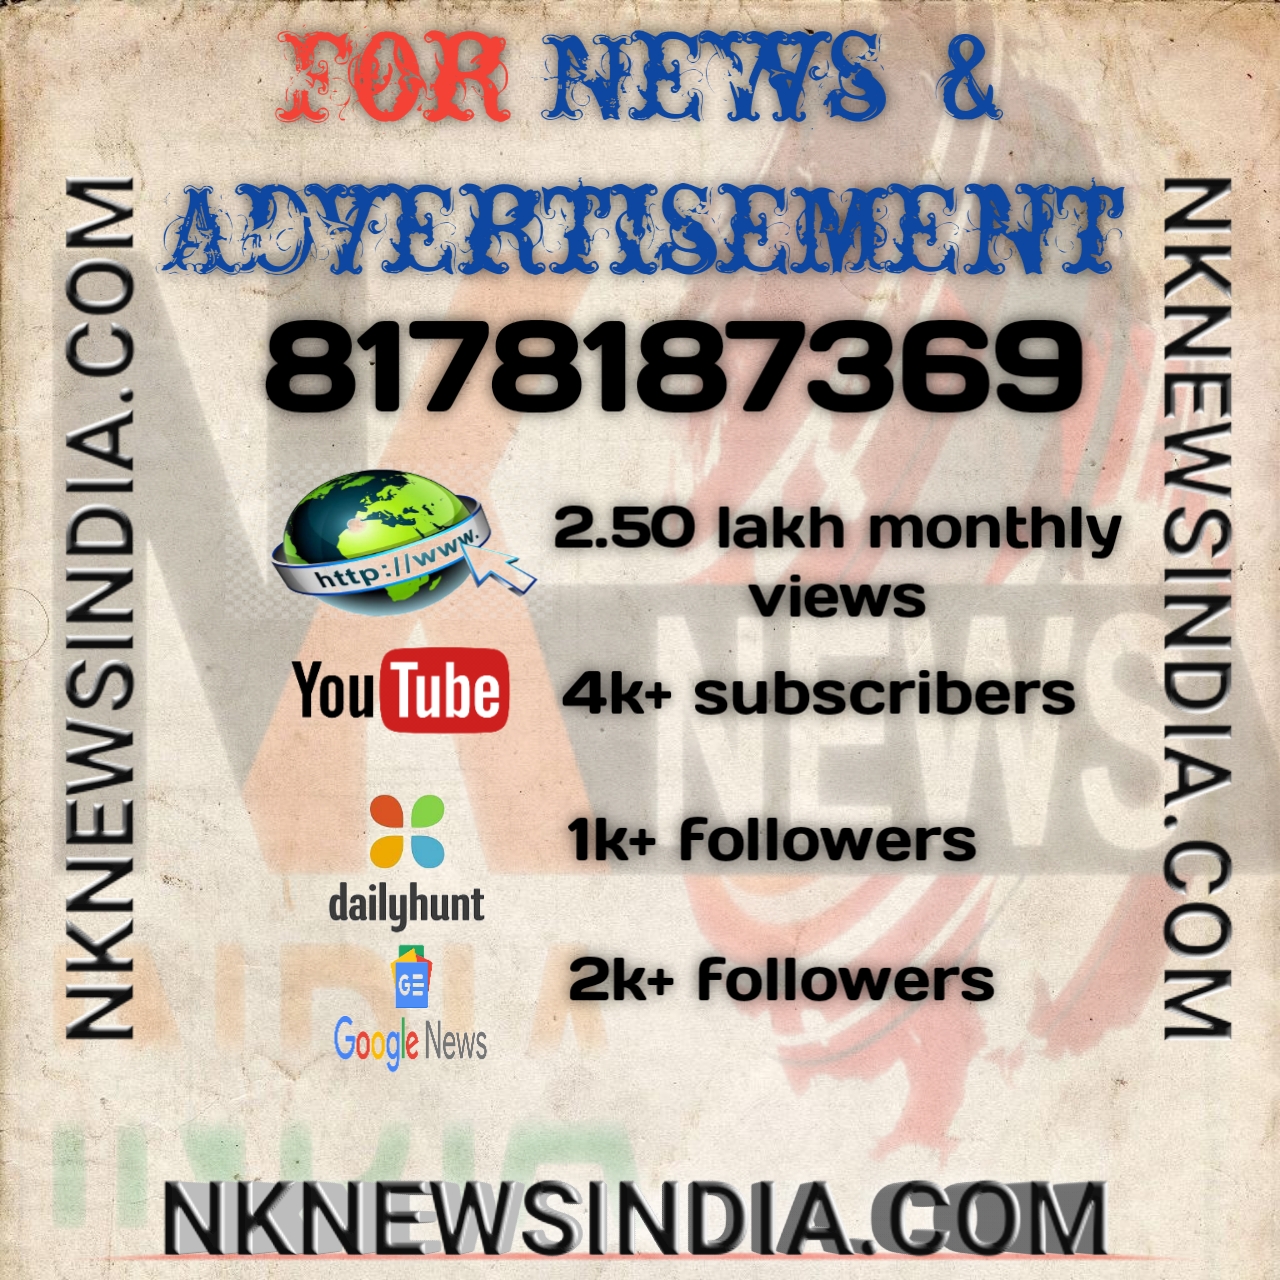 NkNewsIndia